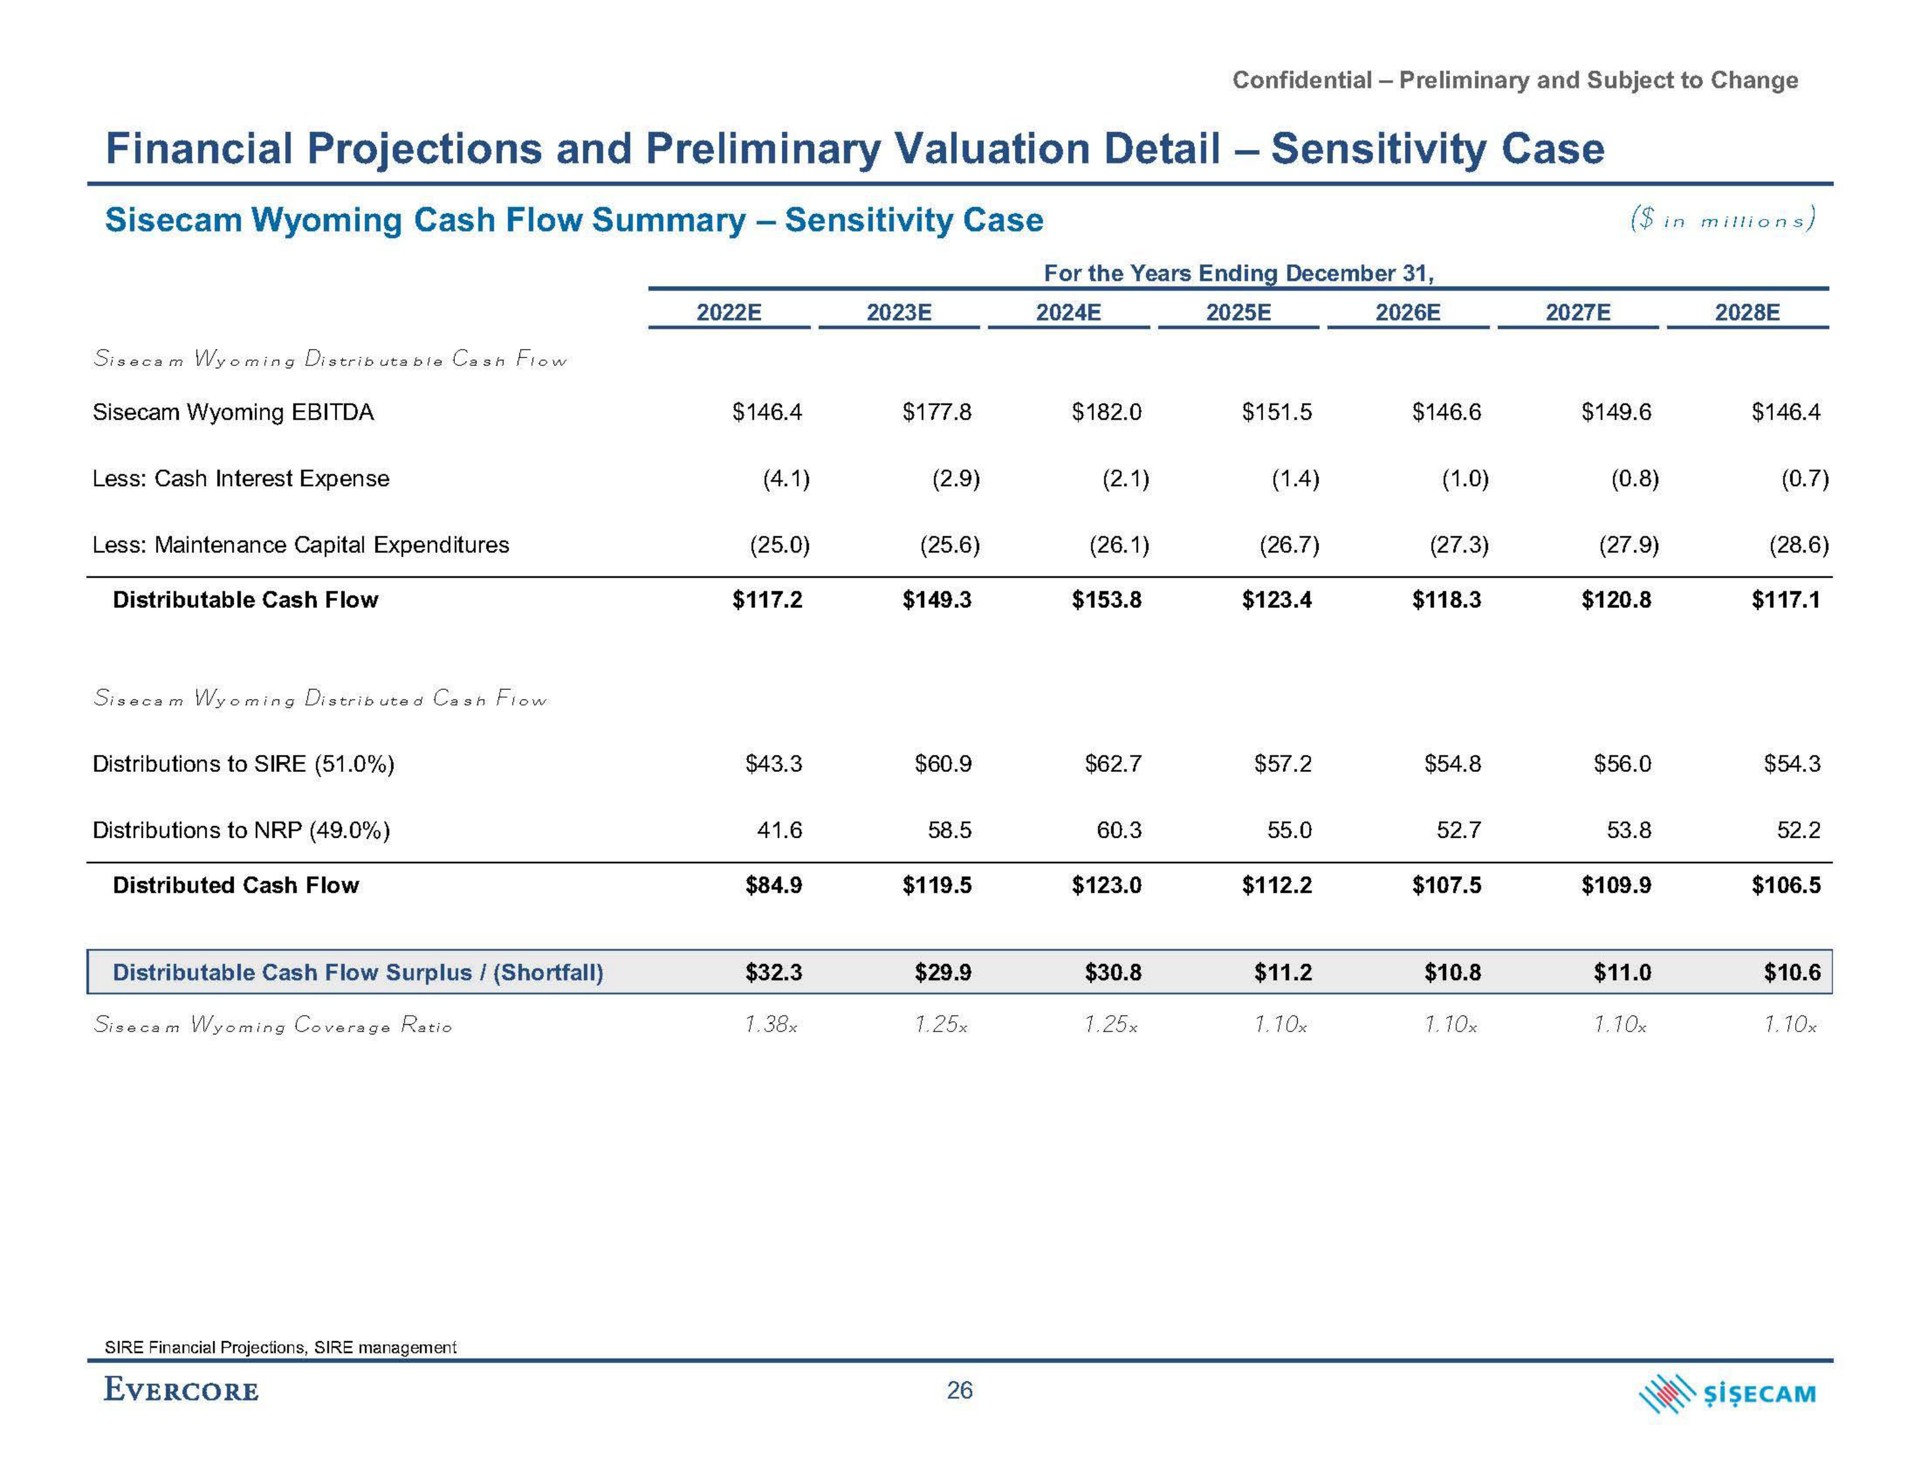 financial projections and preliminary valuation detail sensitivity case cash flow summary sensitivity case | Evercore